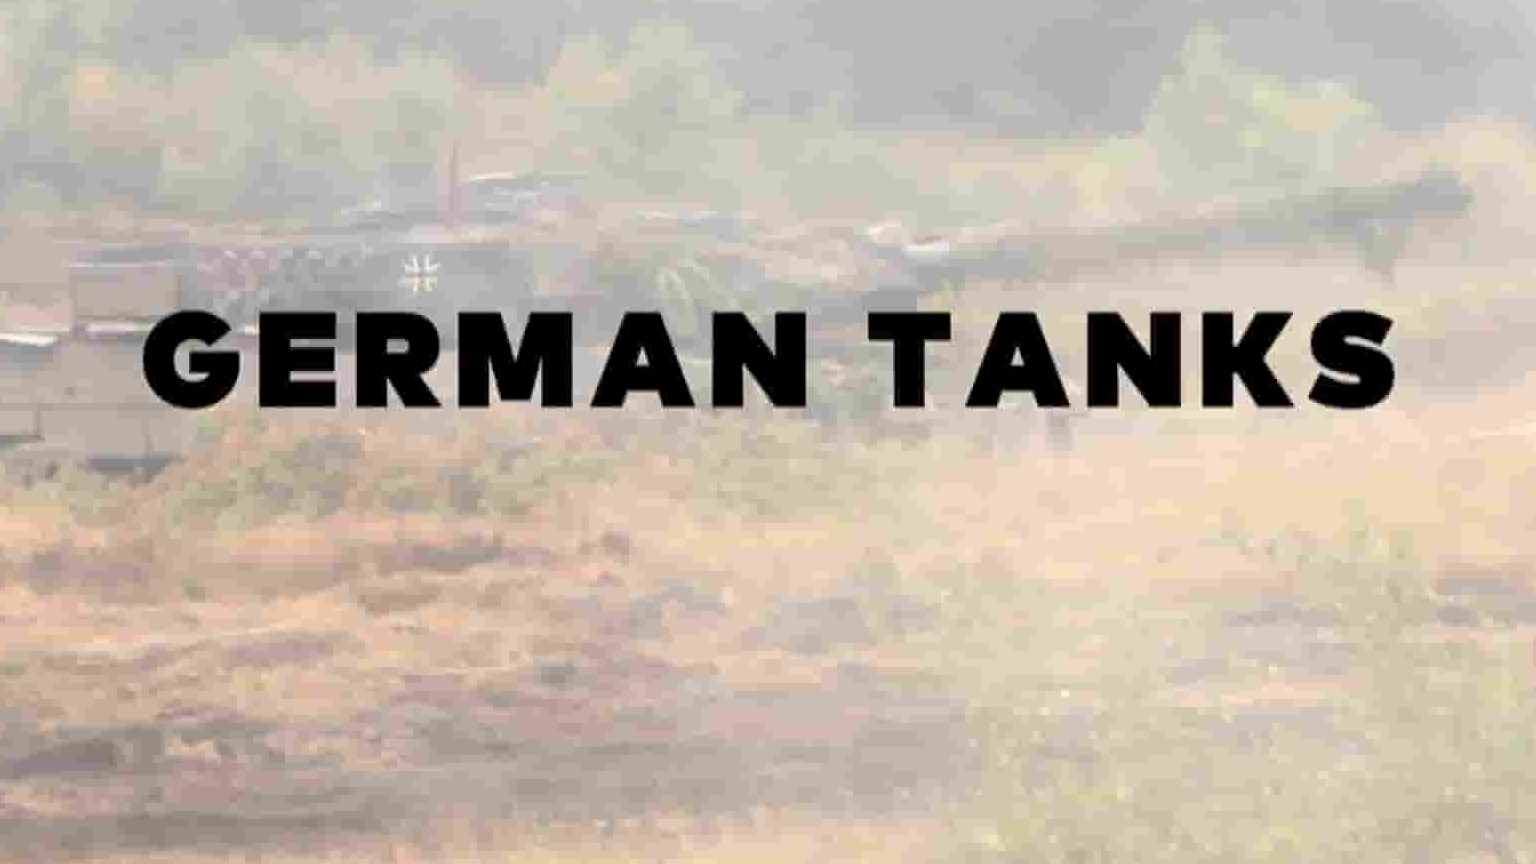 WELT纪录片《德国坦克背后的科技 发展历程与及历史 GERMAN TANKS - Technology, Development & History》全1集 英语中字 1080P高清网盘下载